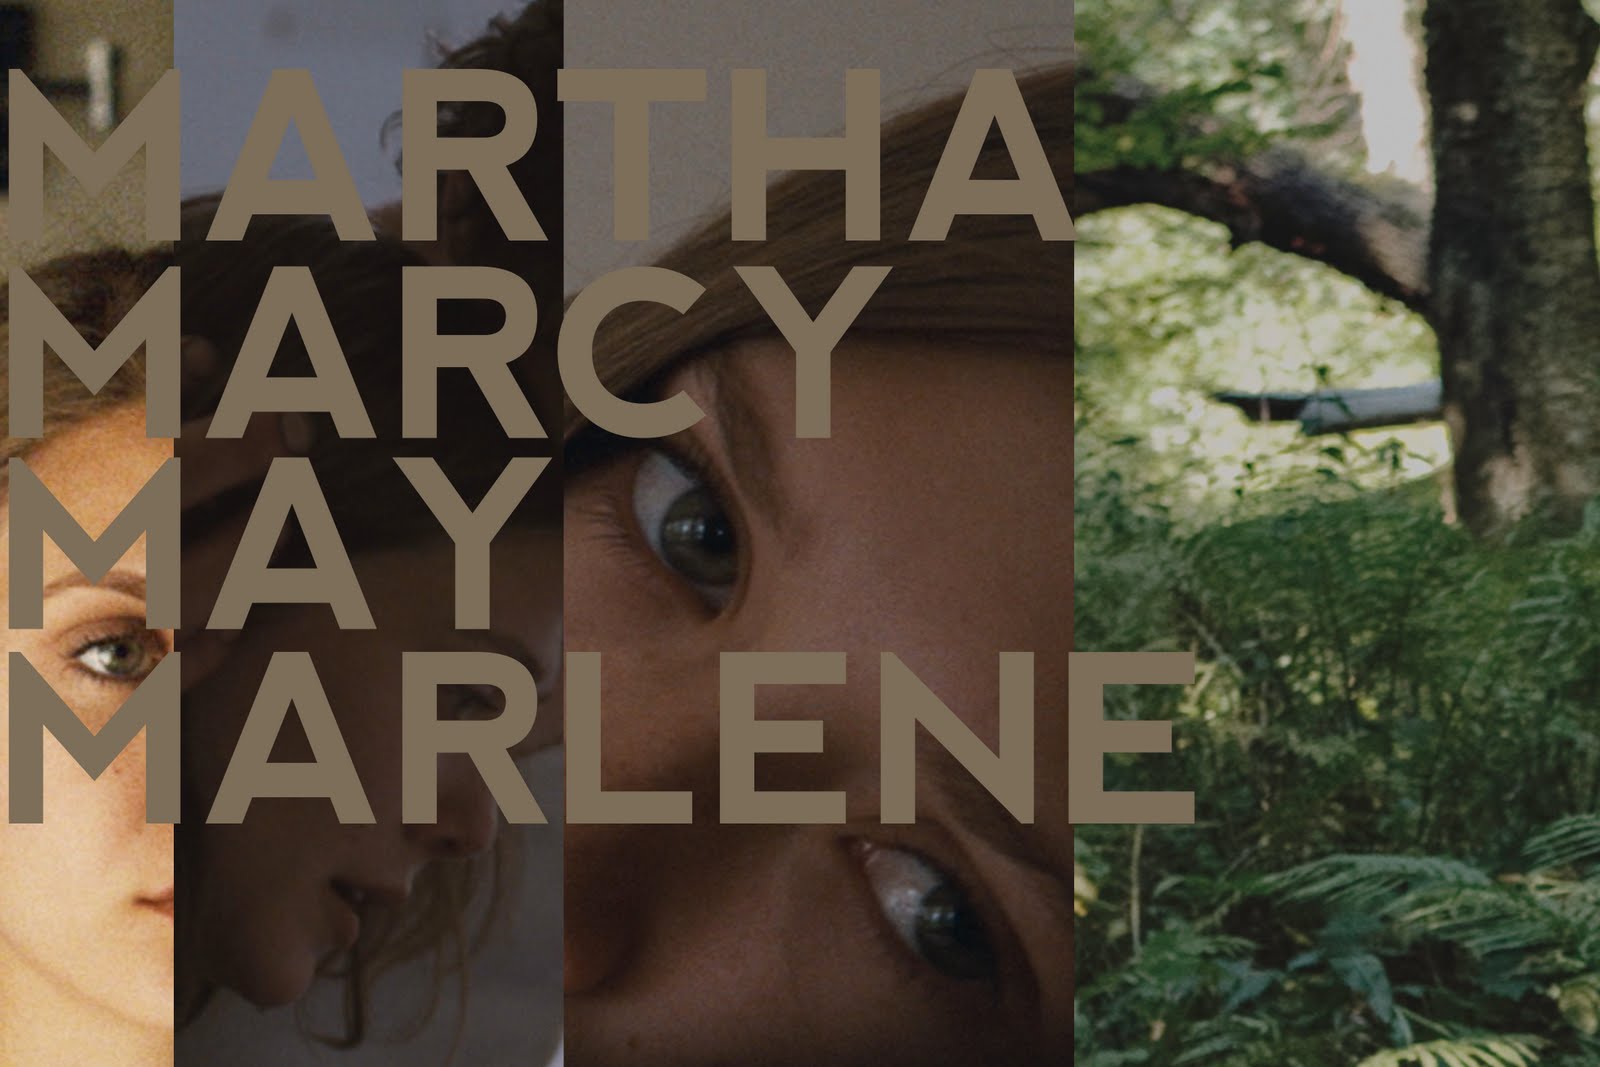 Martha Marcy May Marlene Avalible on Blu-ray/ DVD February 21st